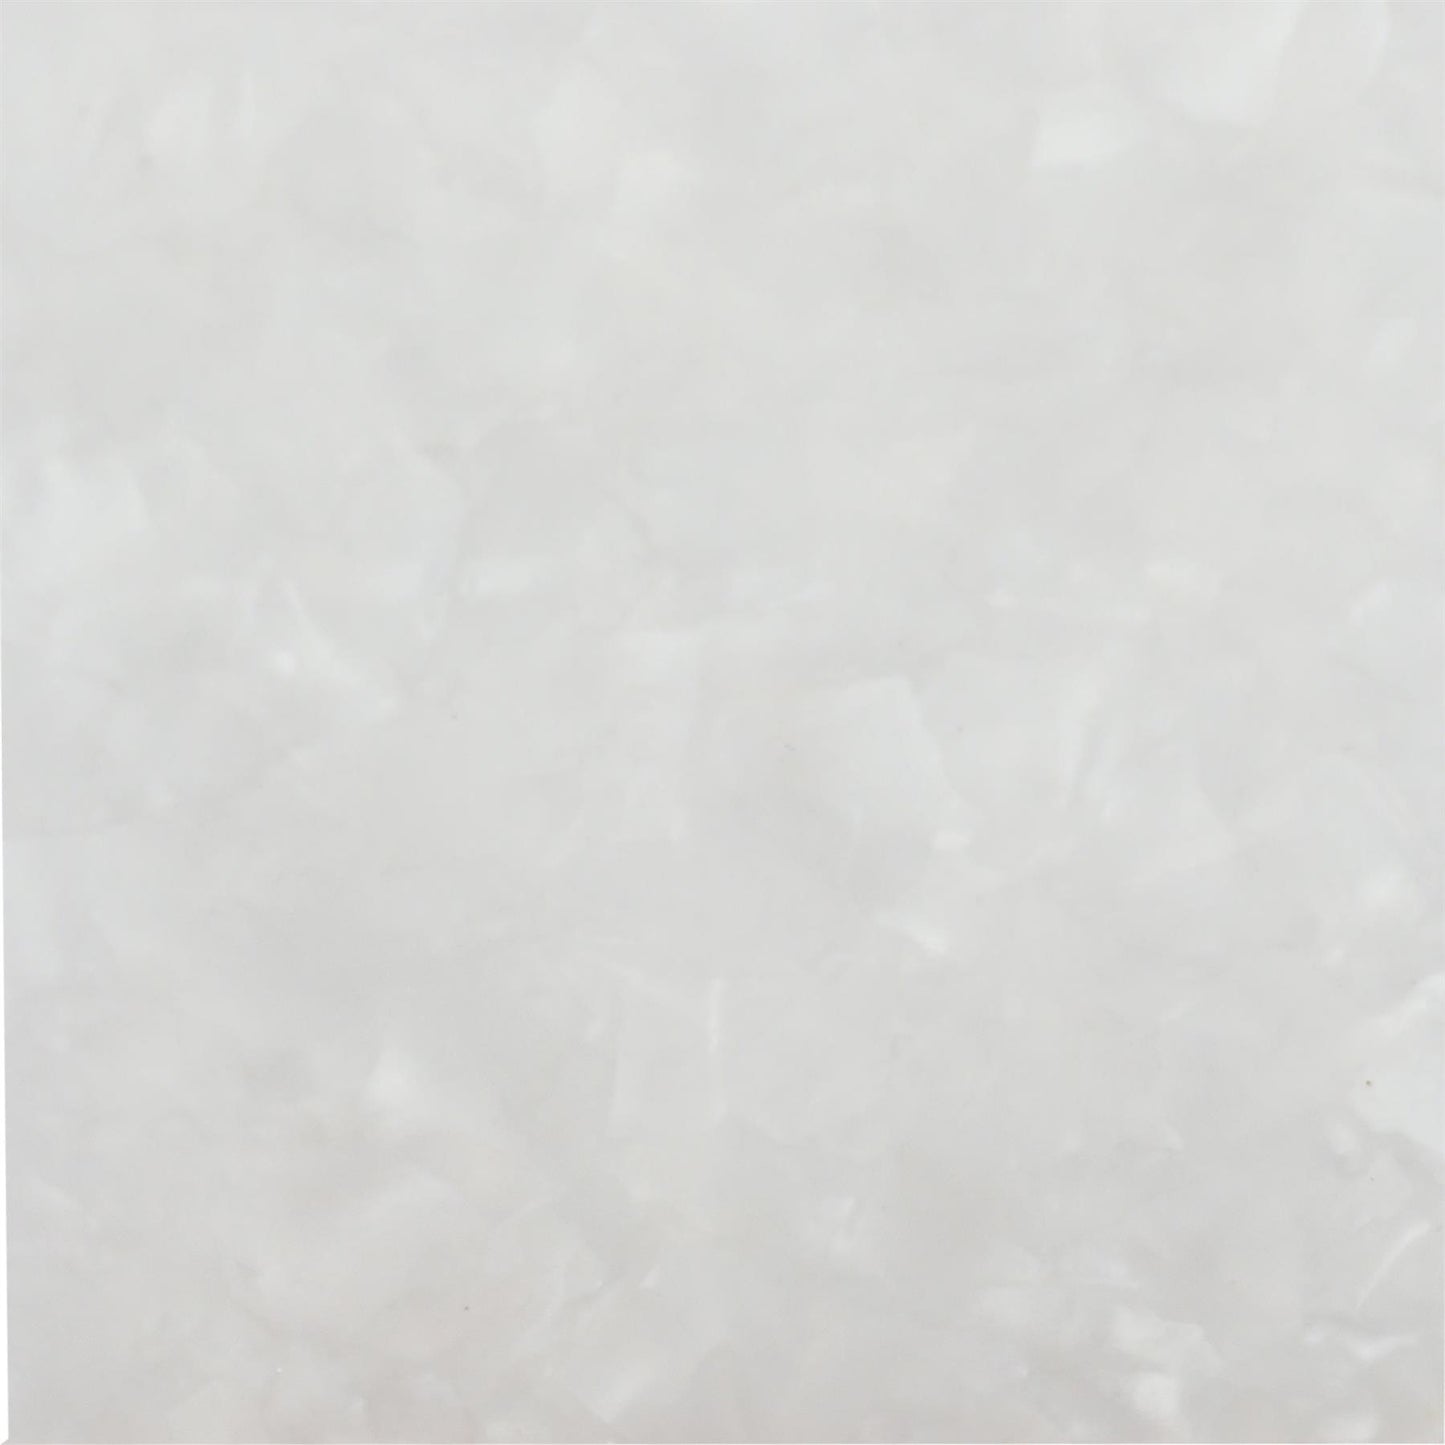 Incudo White Pearloid Acrylic Sheet - 300x200x3mm (11.8x7.87x0.12")